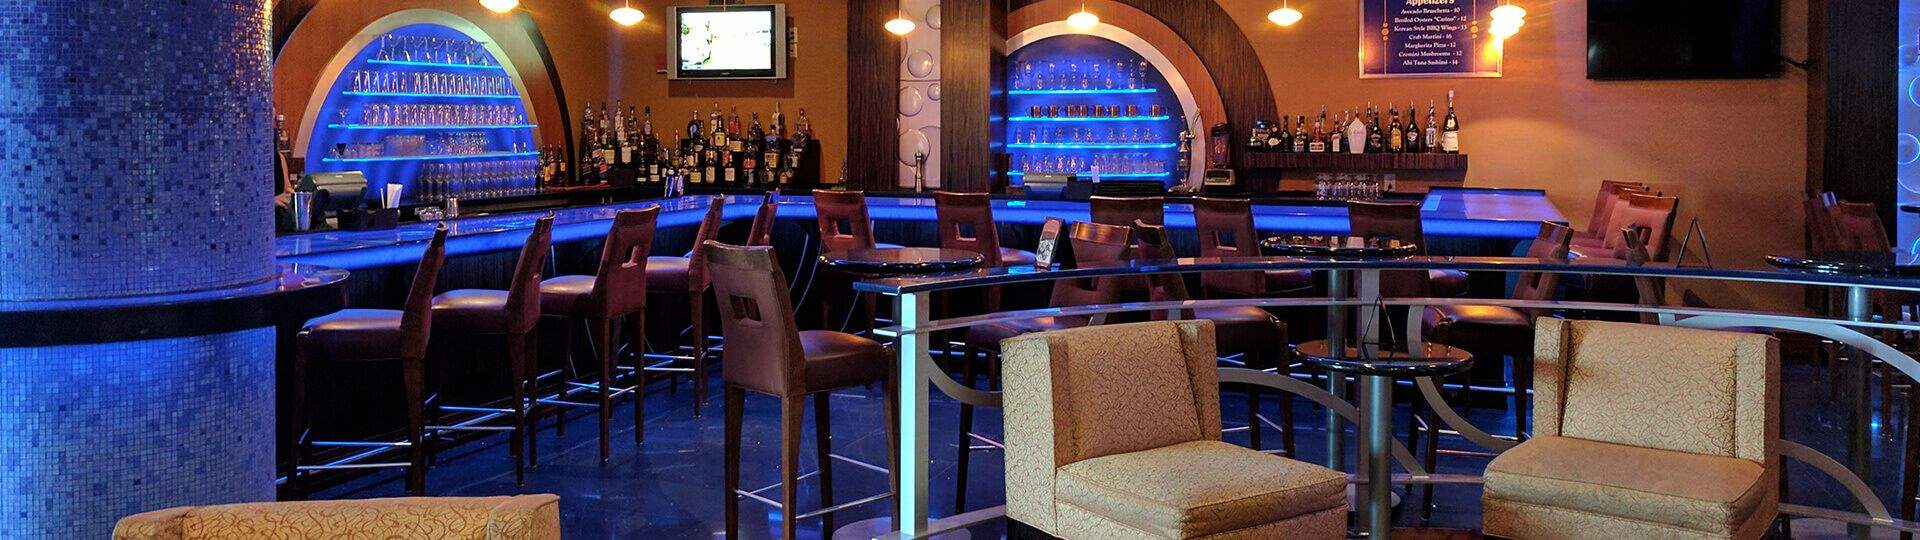 Luna Restaurant & Lounge, Florida - About Us